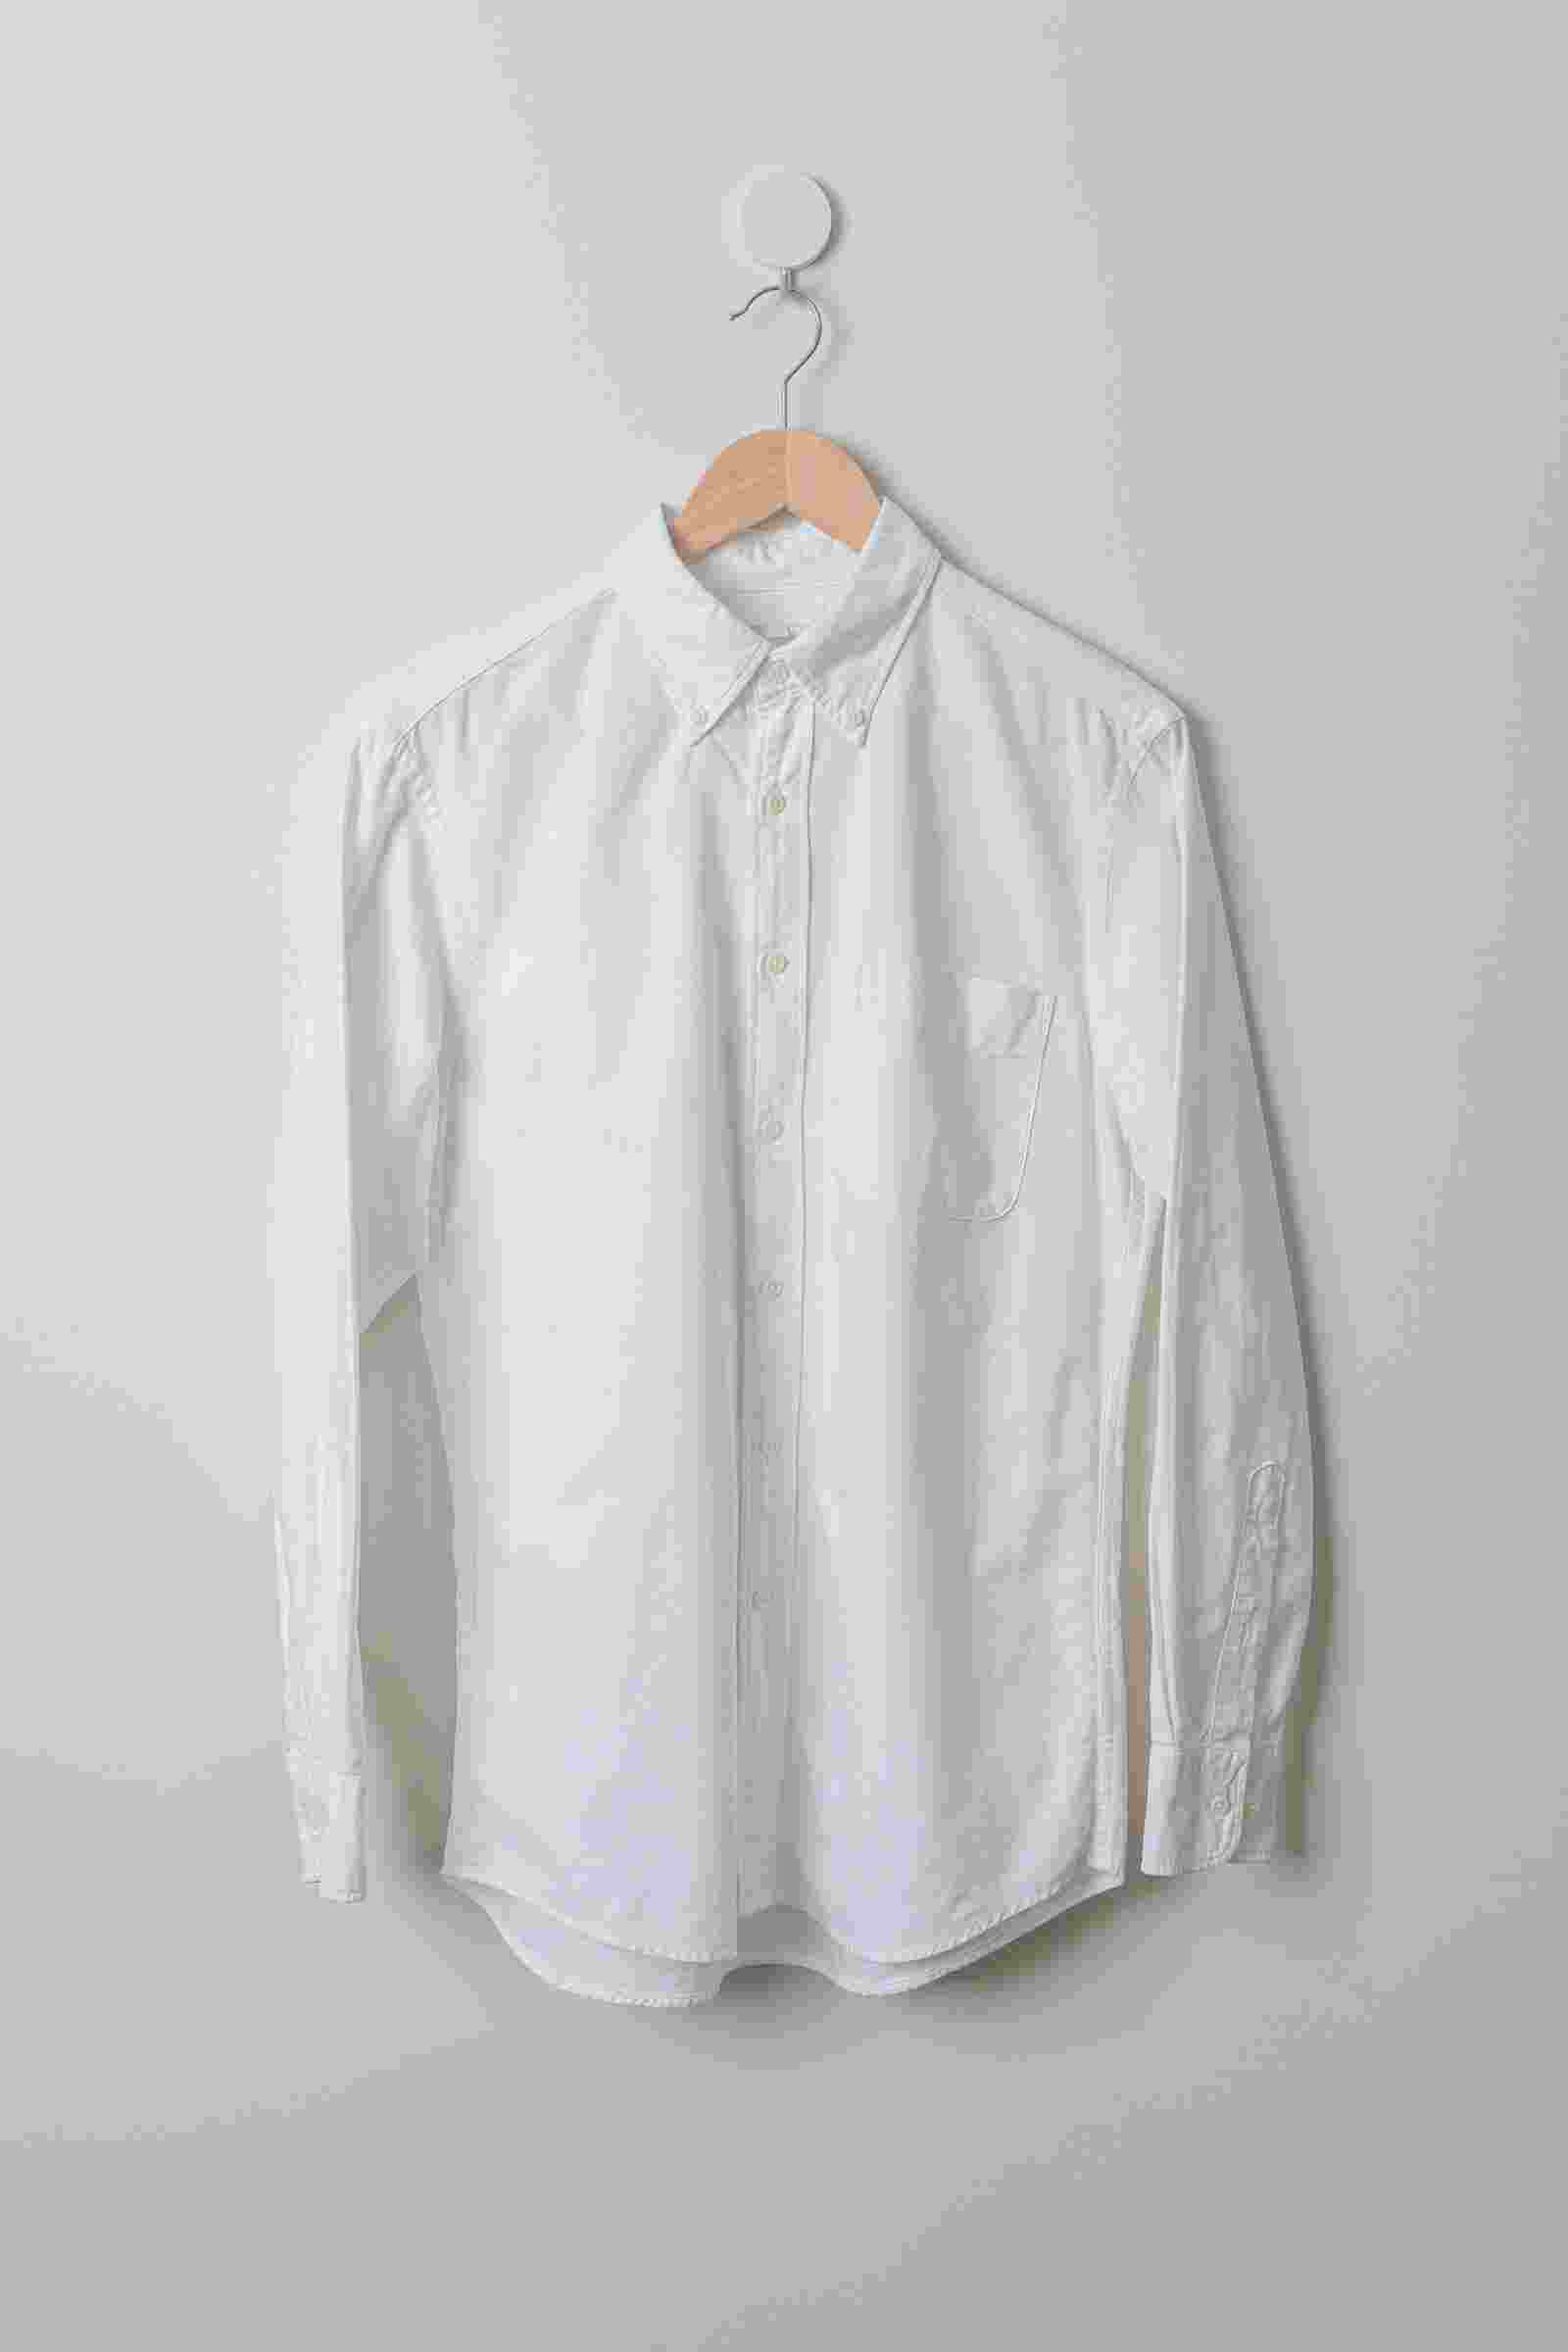 Dress Shirt / White